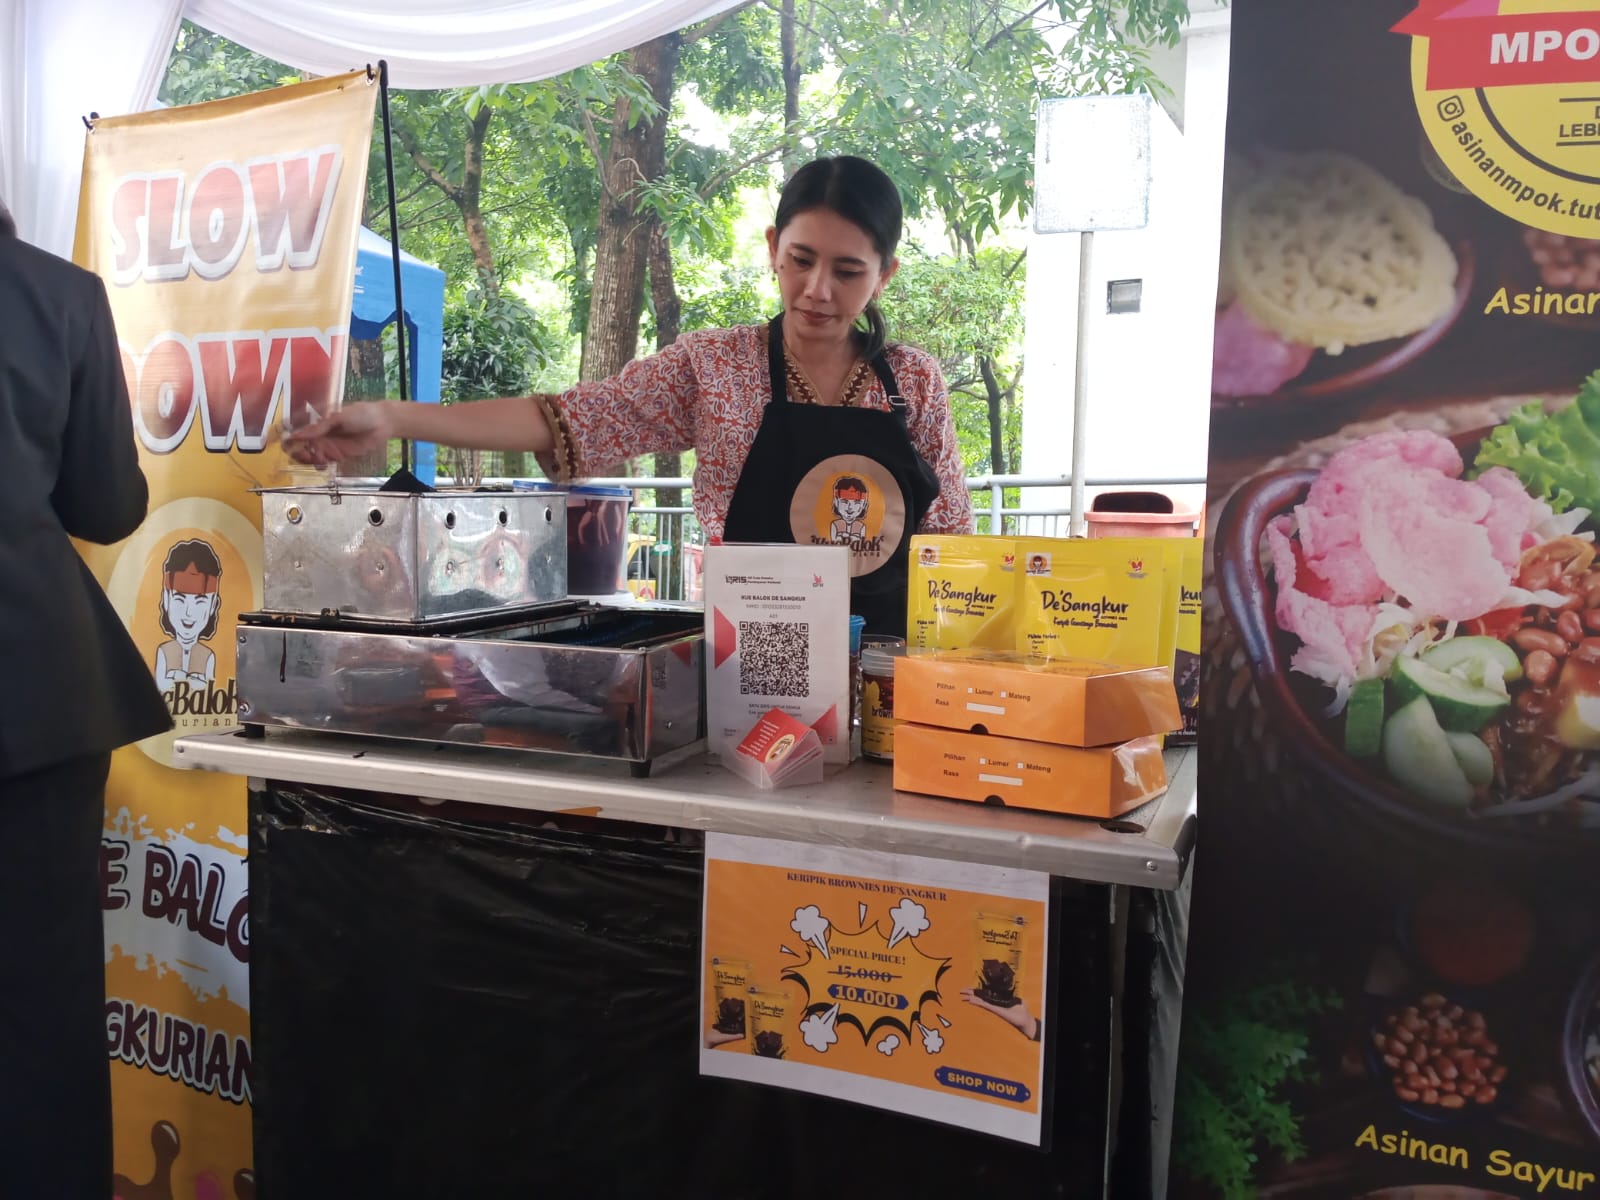 Perjalanan Sukses Kue Balok Sangkuriang: Kisah Inspiratif UMKM Cimahi yang Merambah ke Luar Jawa